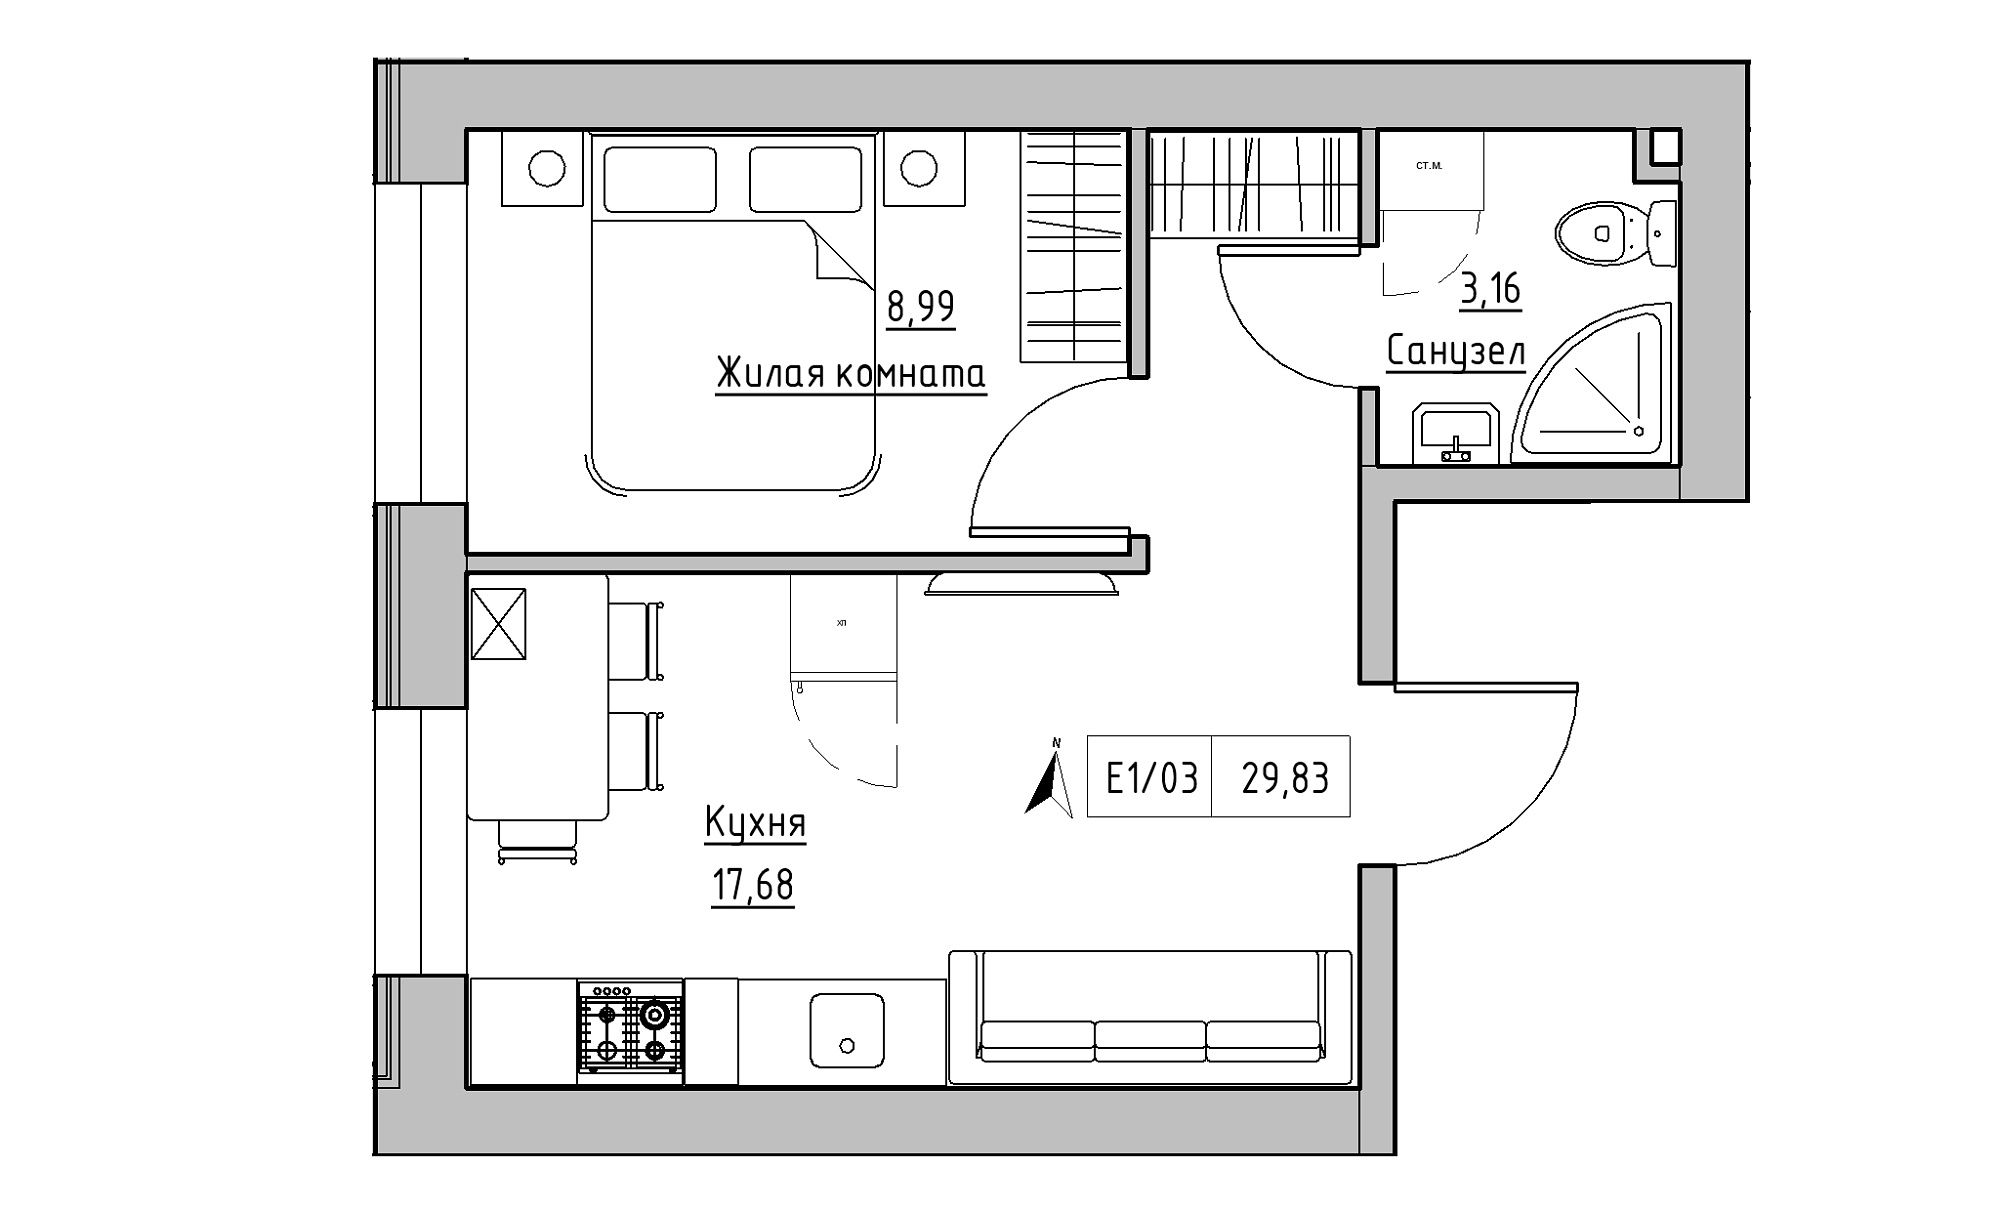 Planning 1-rm flats area 29.83m2, KS-015-01/0003.